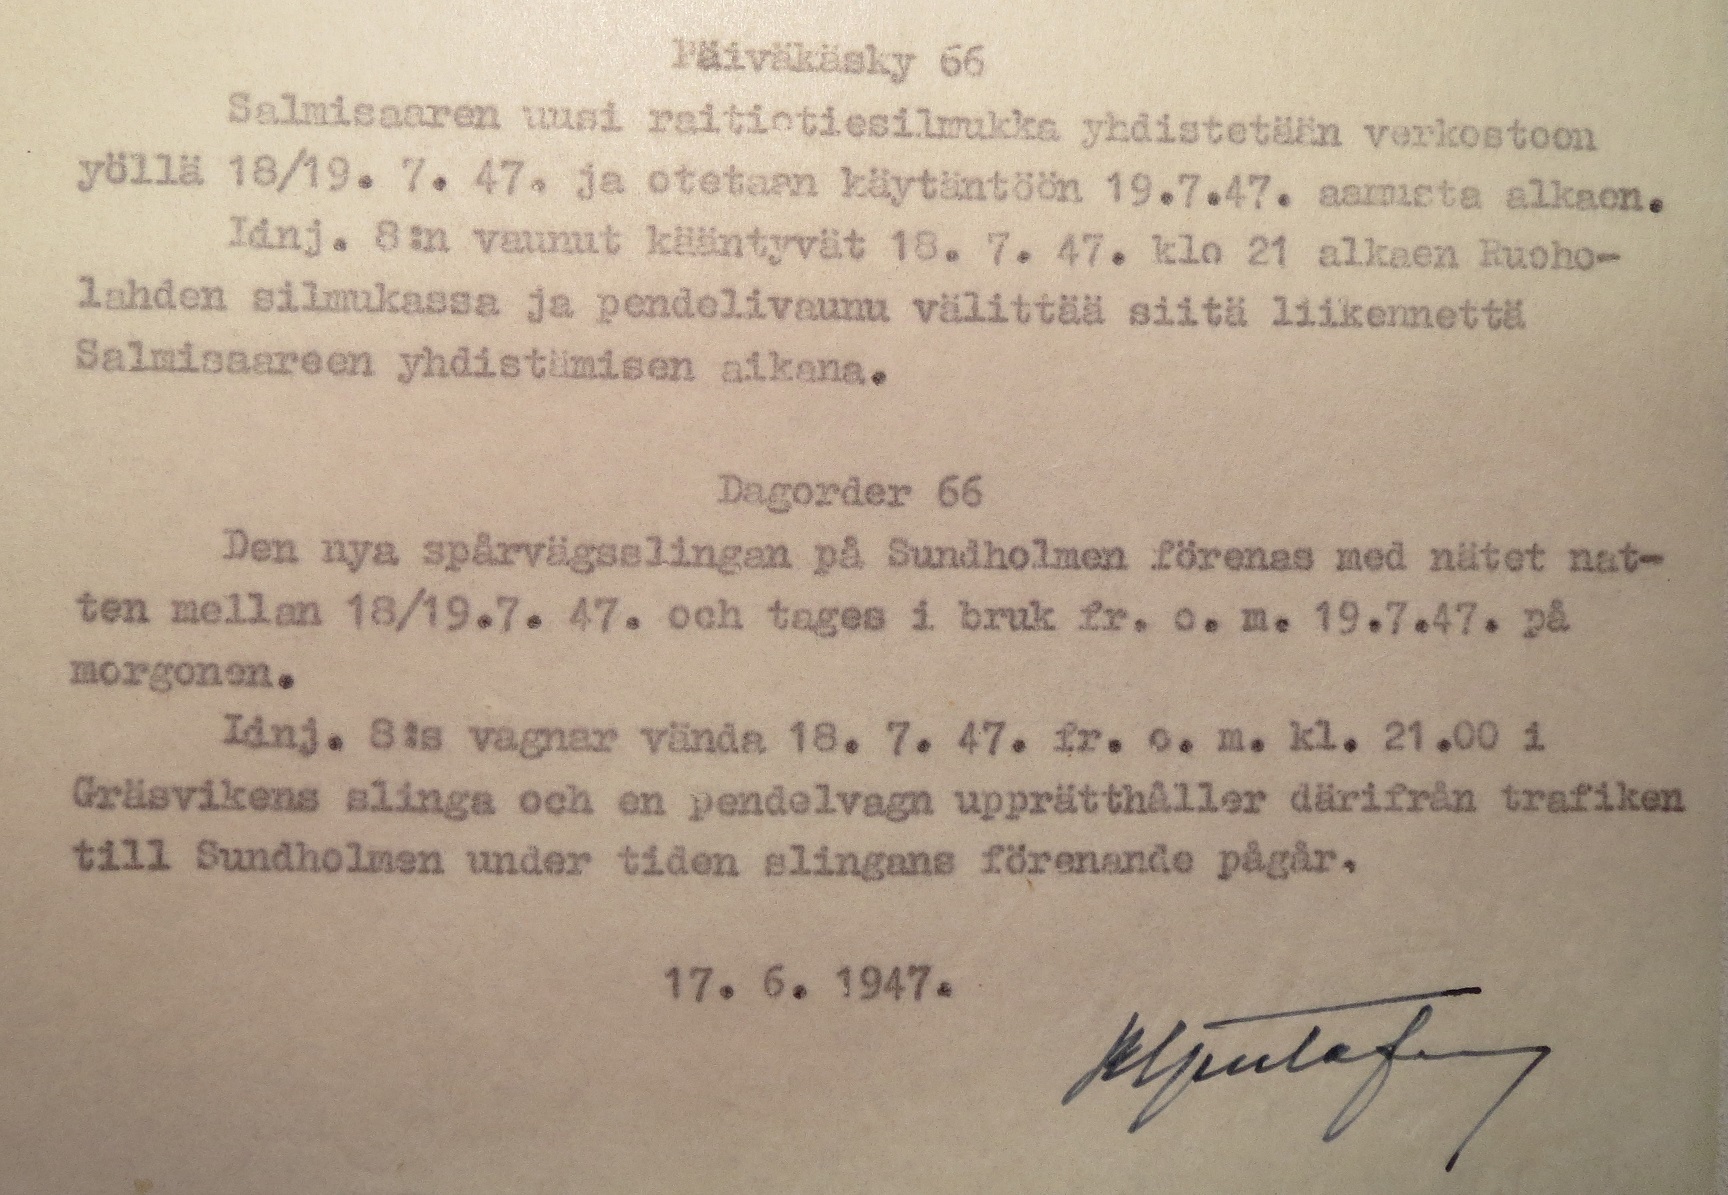 HKL:n päiväkäsky 66/1947